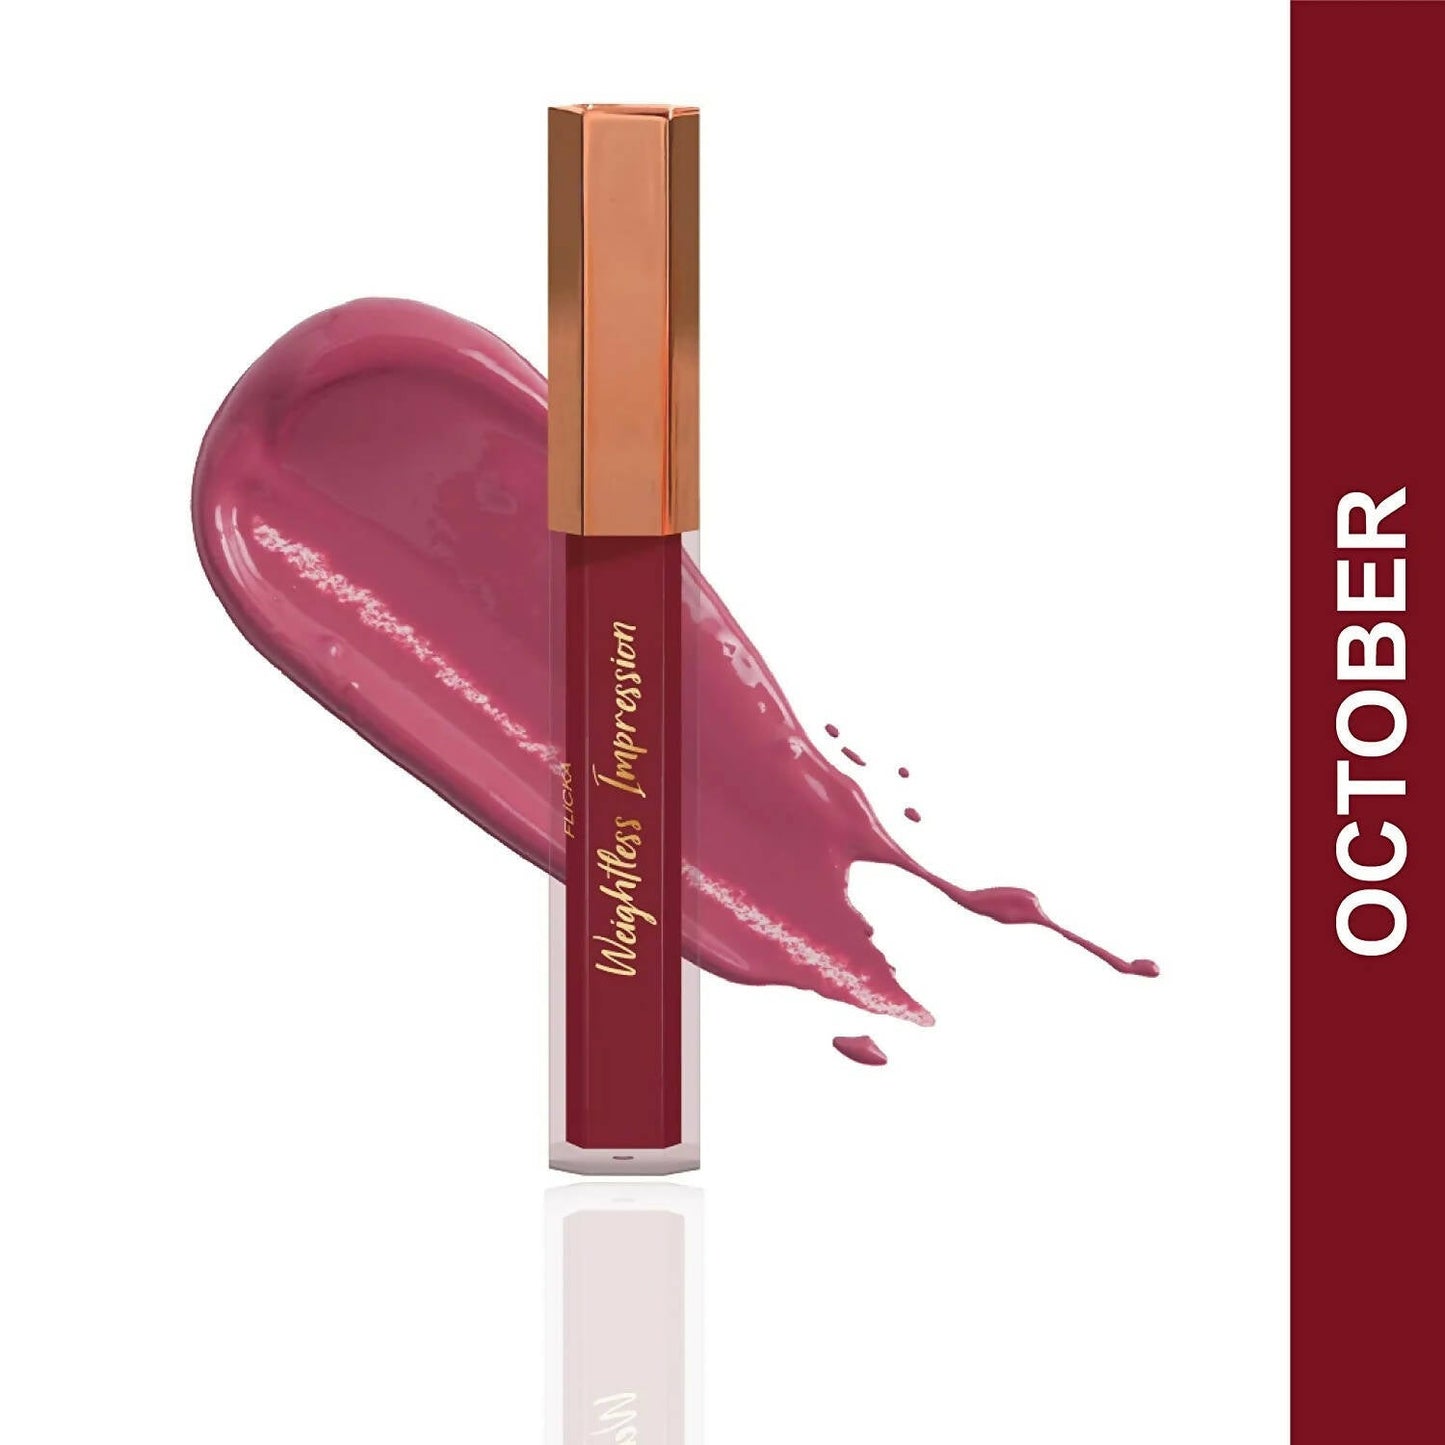 FLiCKA Weightless Impression 10 October - Pink Matte Finish Liquid Lipstick